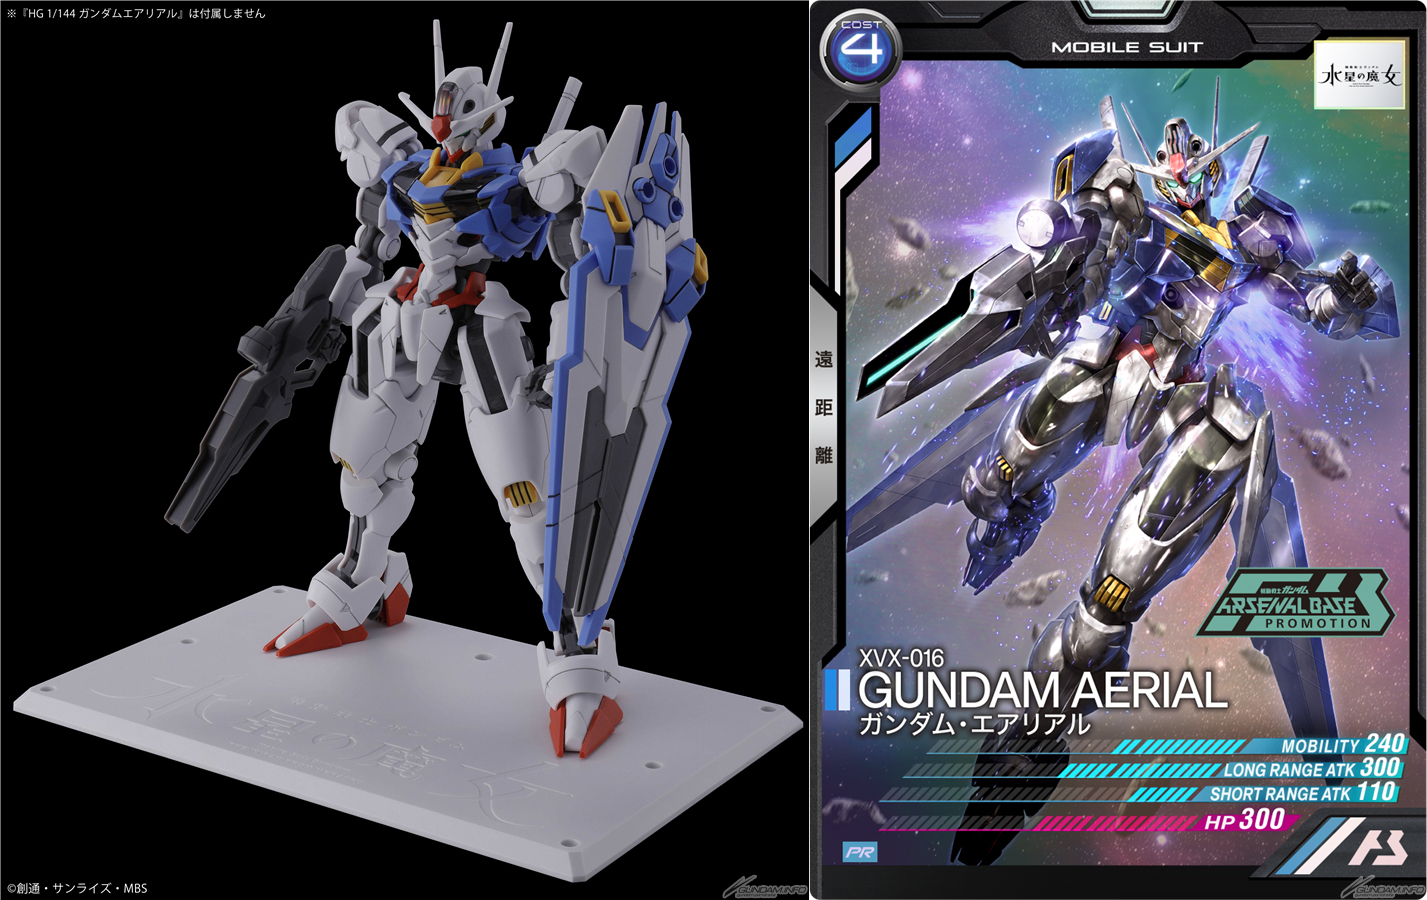 Gundam NEXT Future TOKYO Base to Exhibit a 1/1 Scale Gundam Aerial 